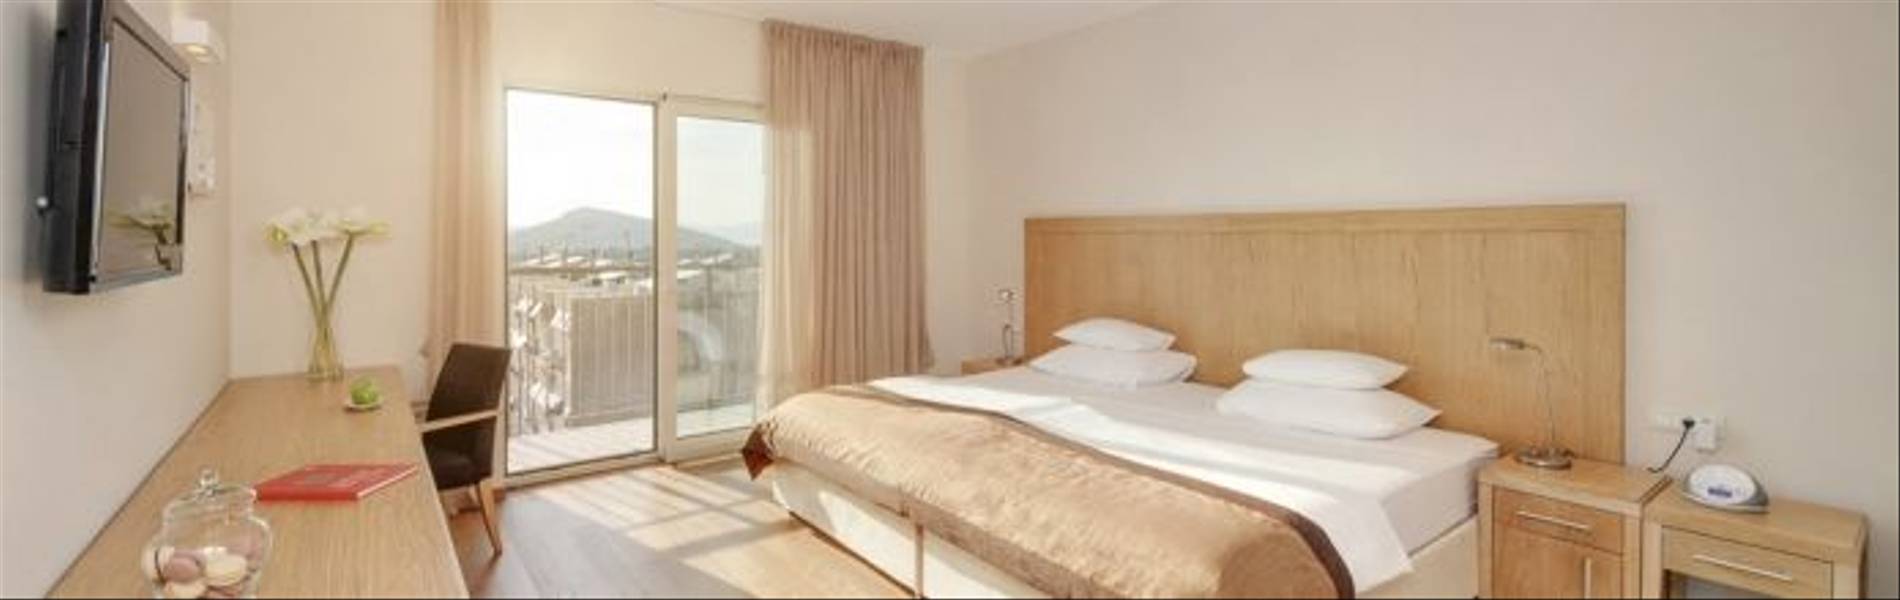 HotelResidence_DIOKLECIJAN_room-bedRoom-interier-panorama_2048px_5D3A2360-695x409.jpg